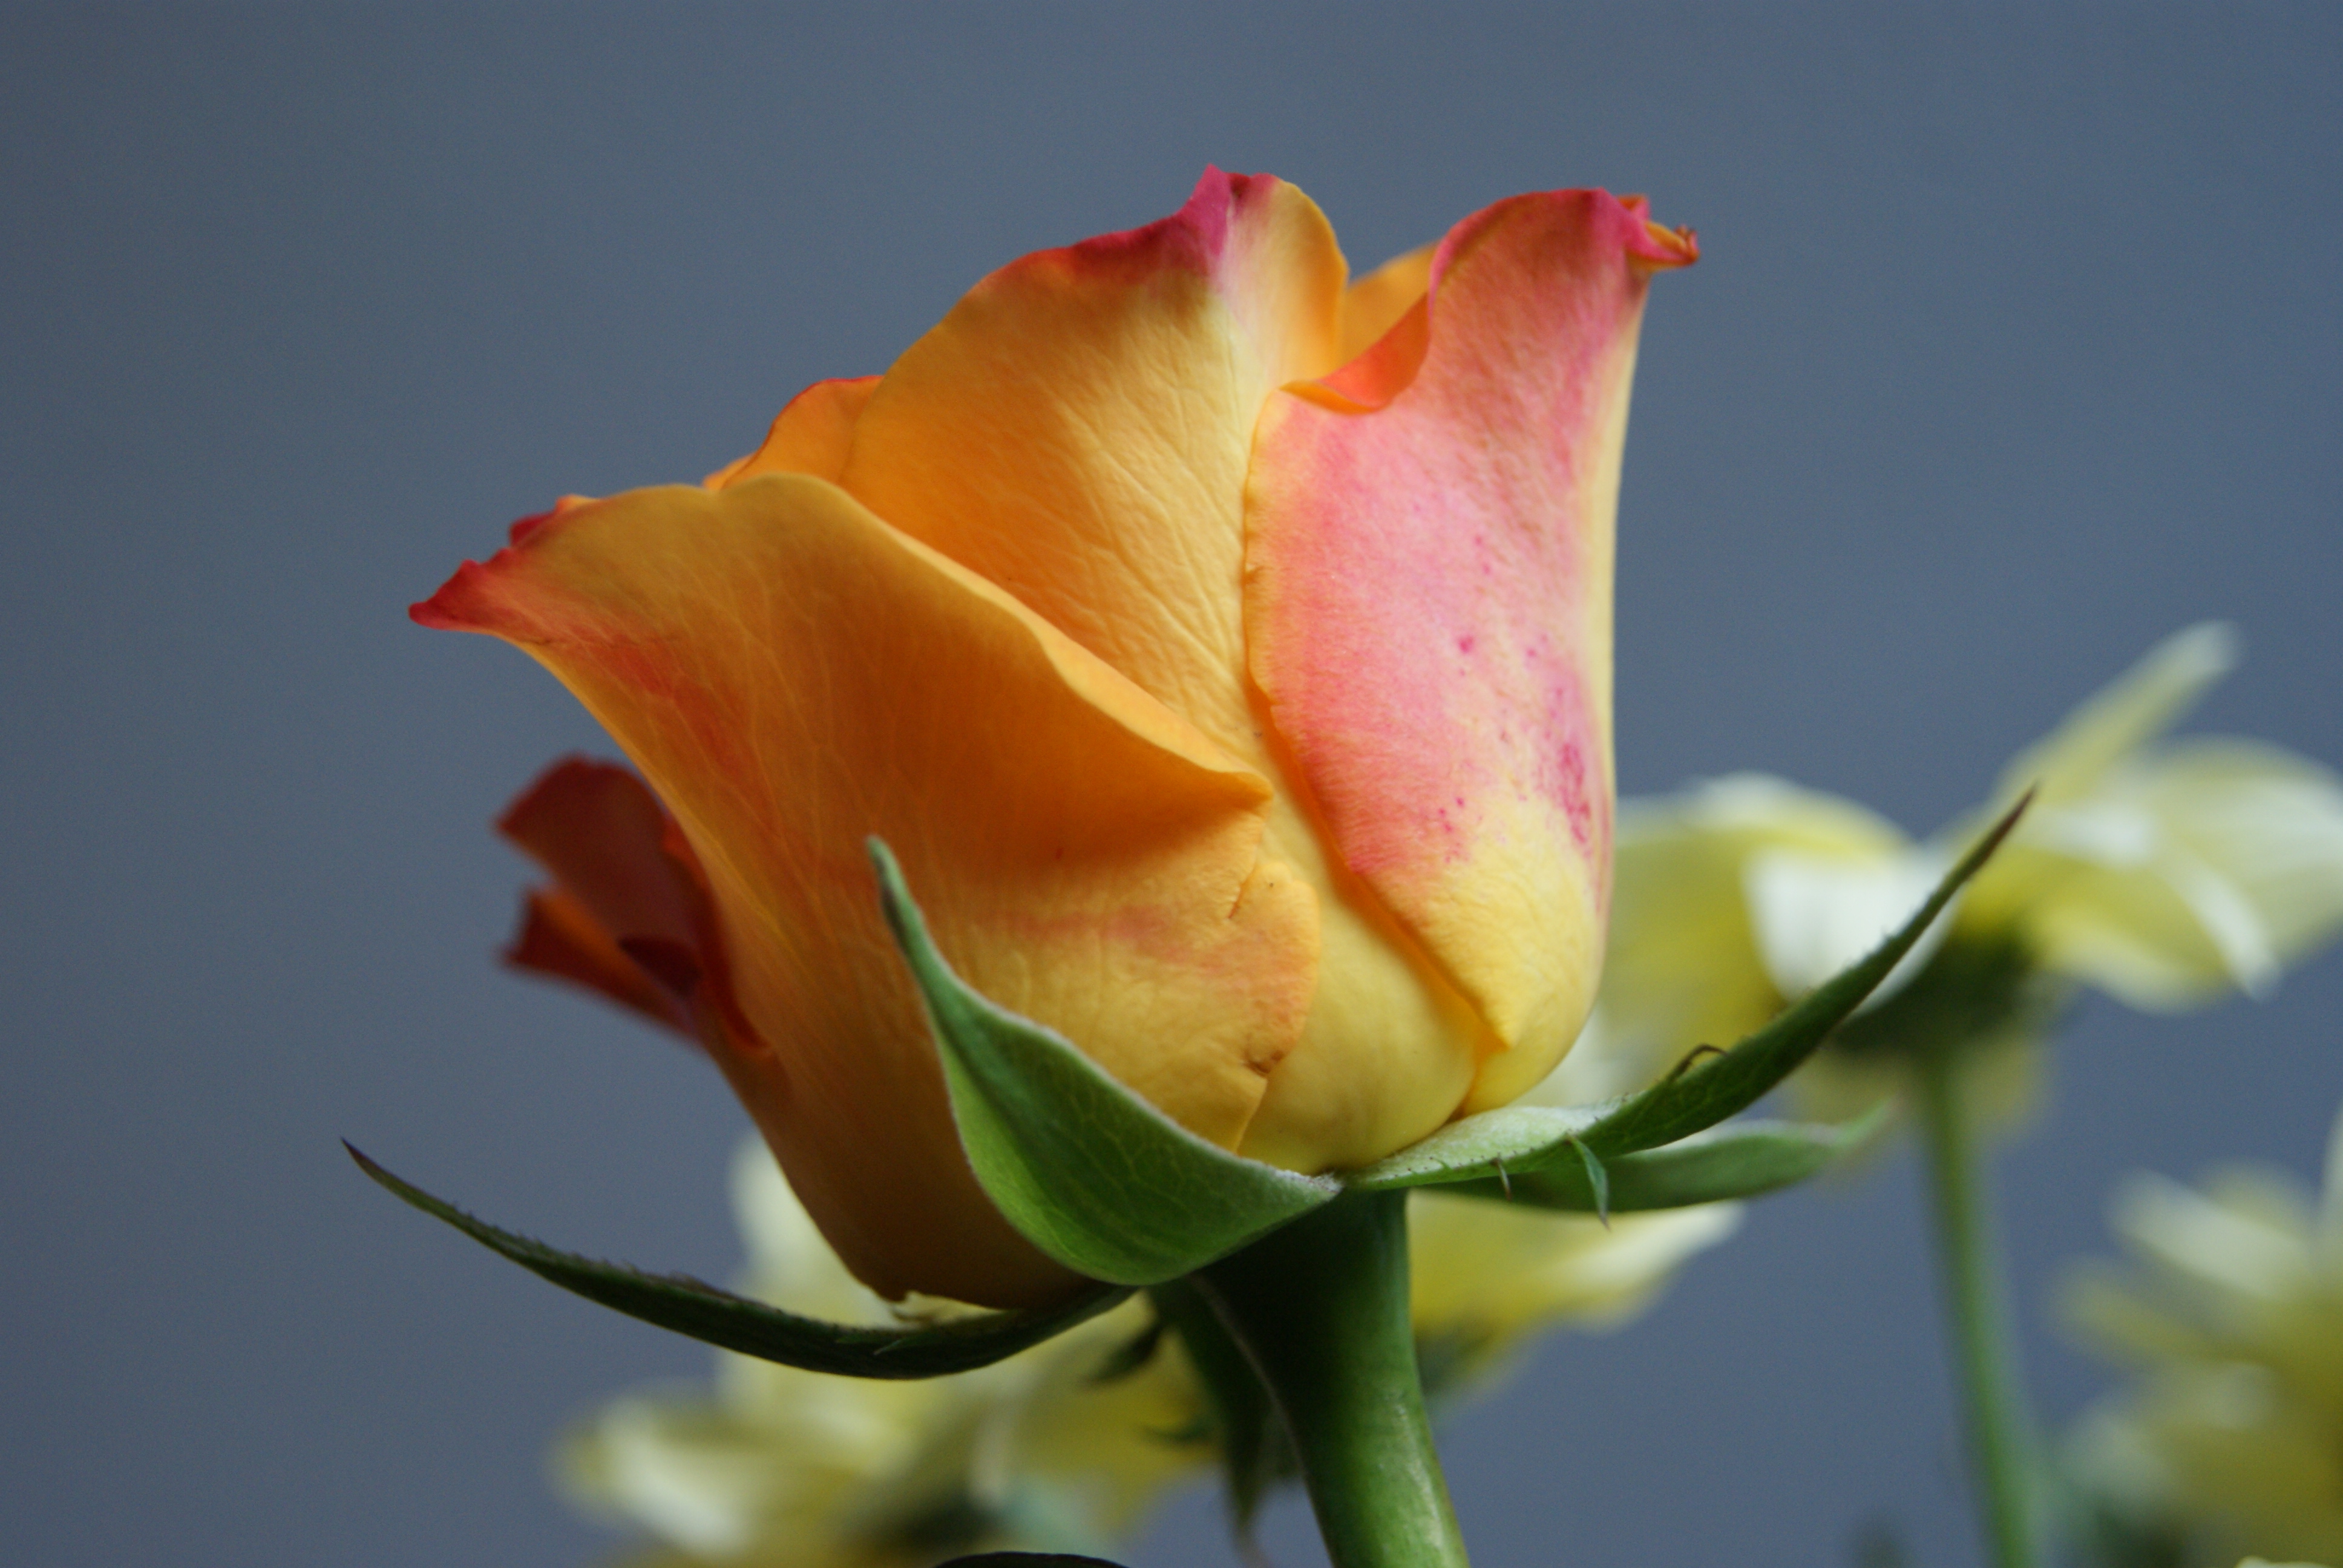 File:Yellow-Rose.JPG - Wikimedia Commons